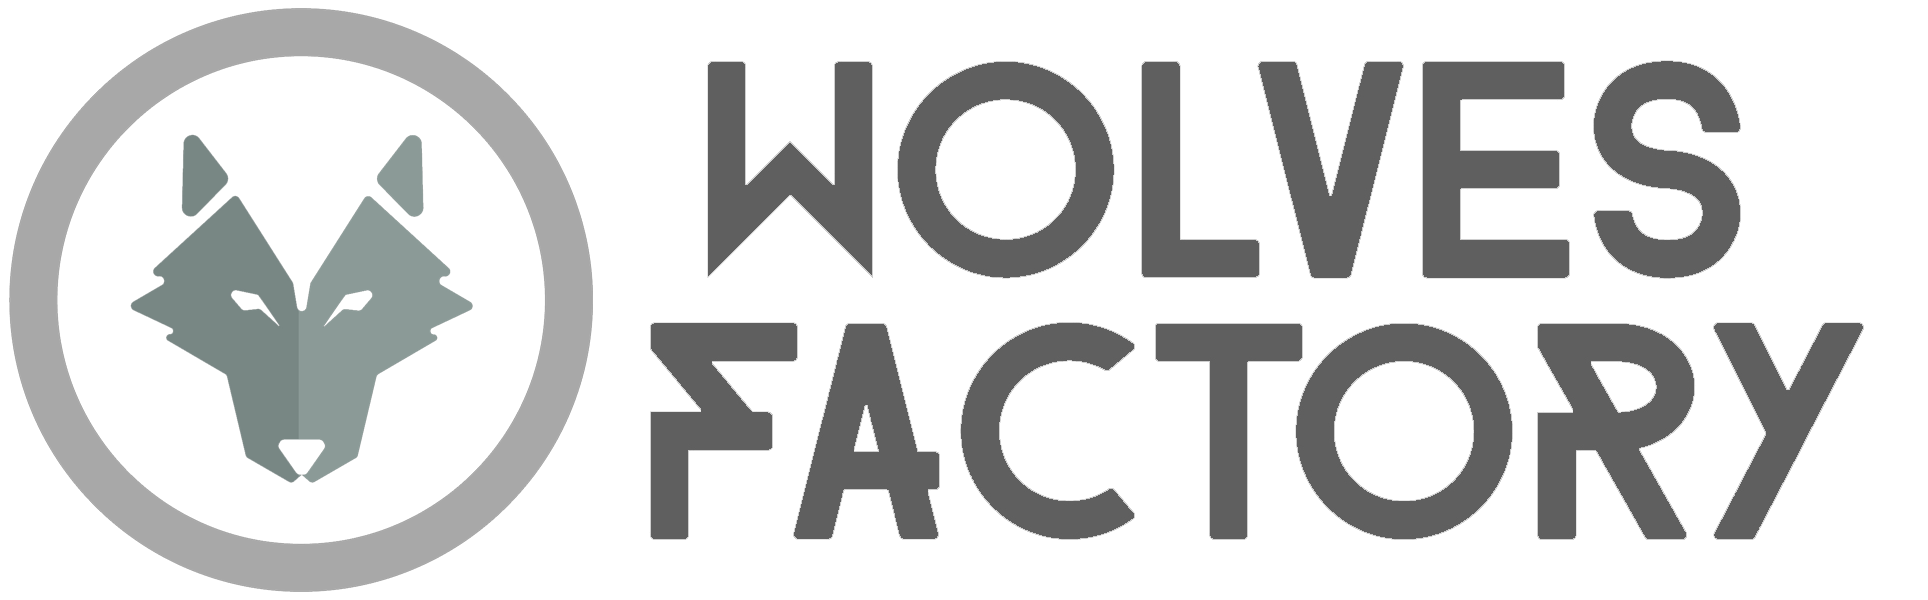 App Wolves factory